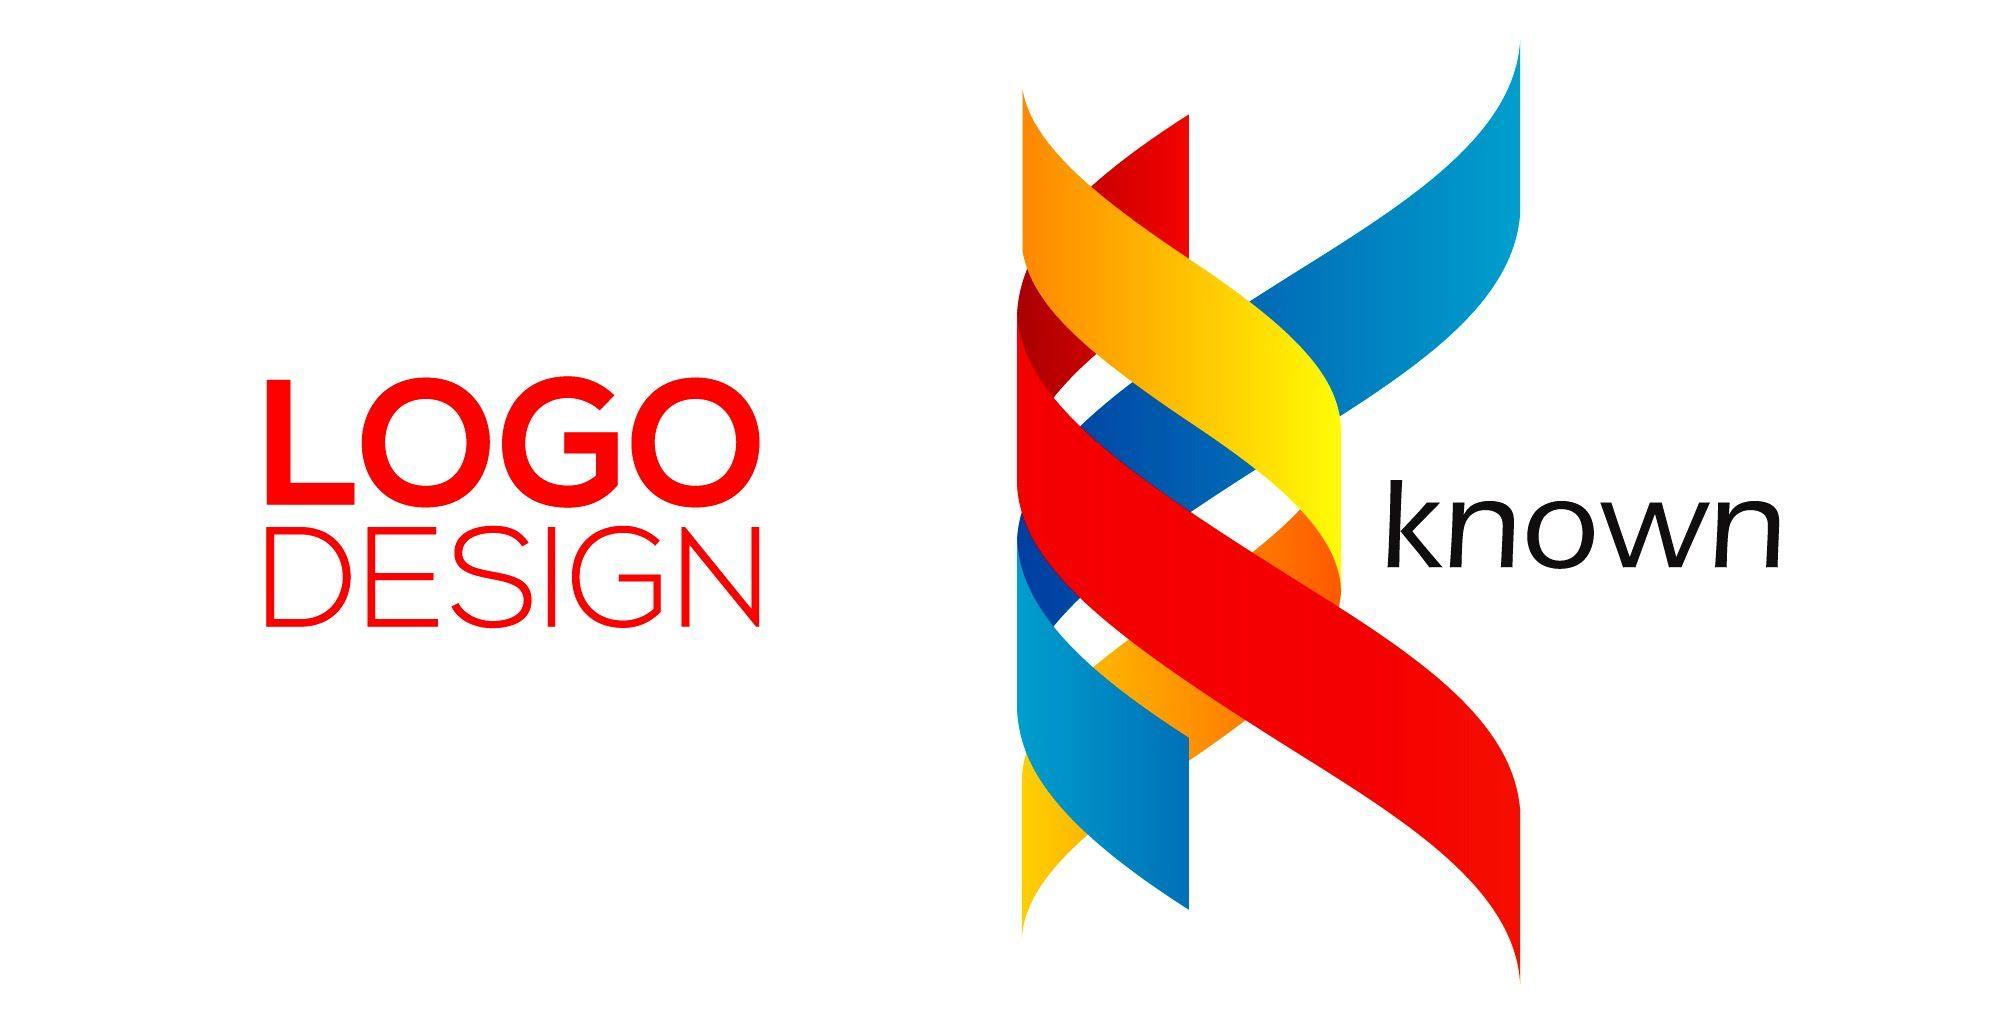 Design Logo - PROFESSIONAL AND UNIQUE LOGO DESIGN FOR YOU for $5 - SEOClerks